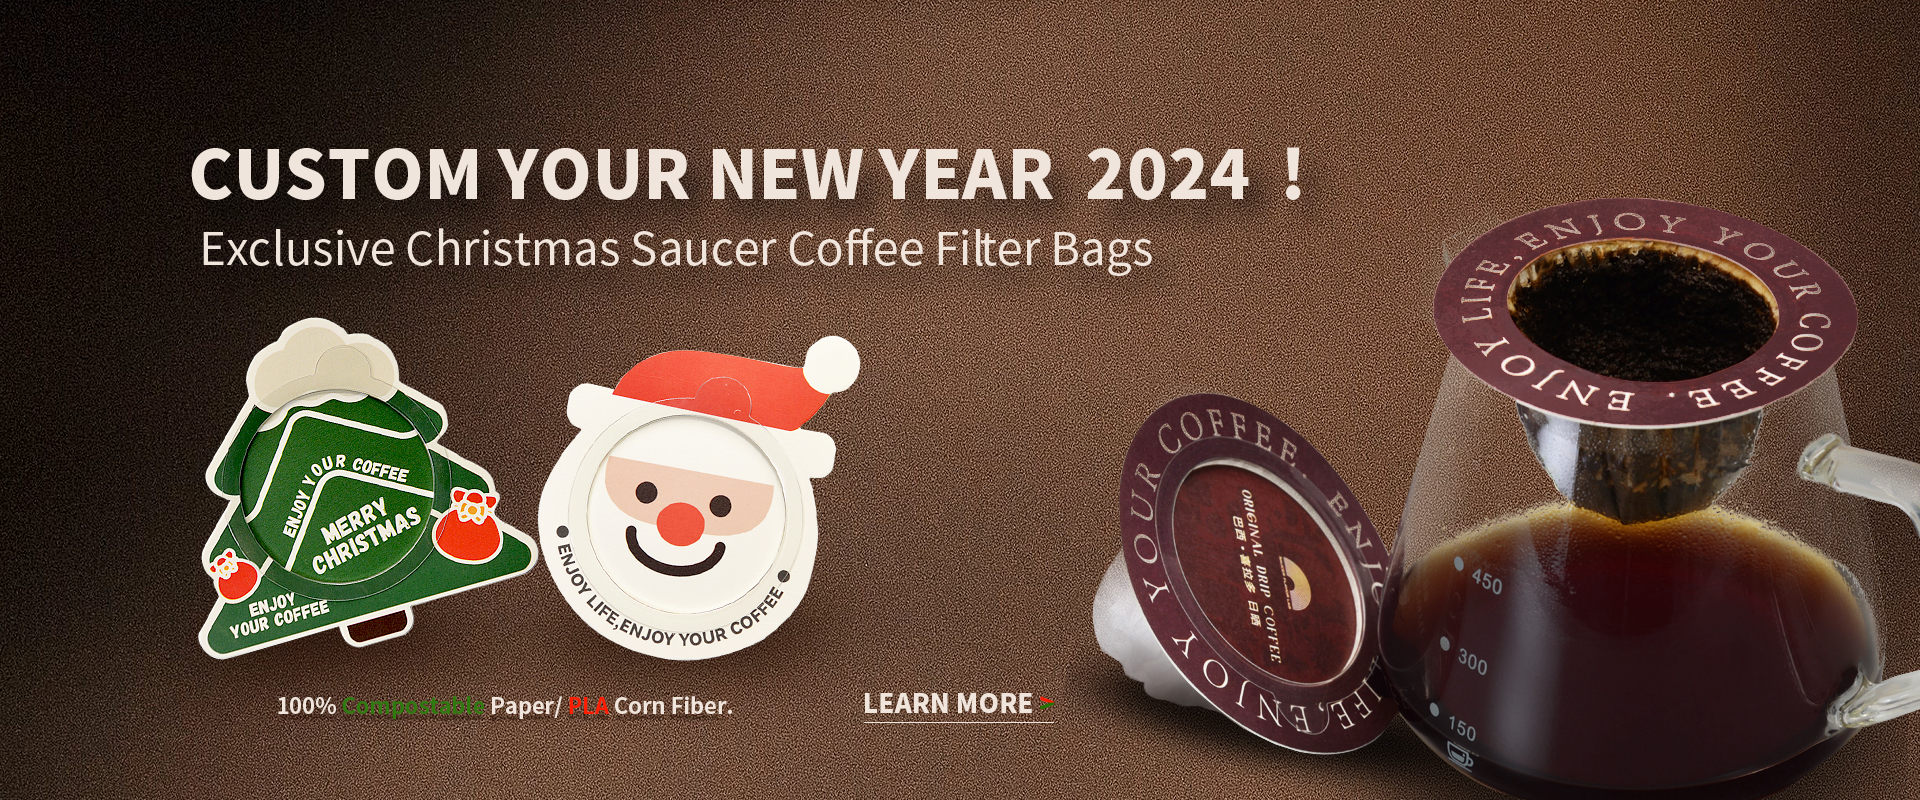 https://www.coffeeteabag.com/chritmas-fedora-eco-friend-saucer-drip-coffee-filter-bag-product/